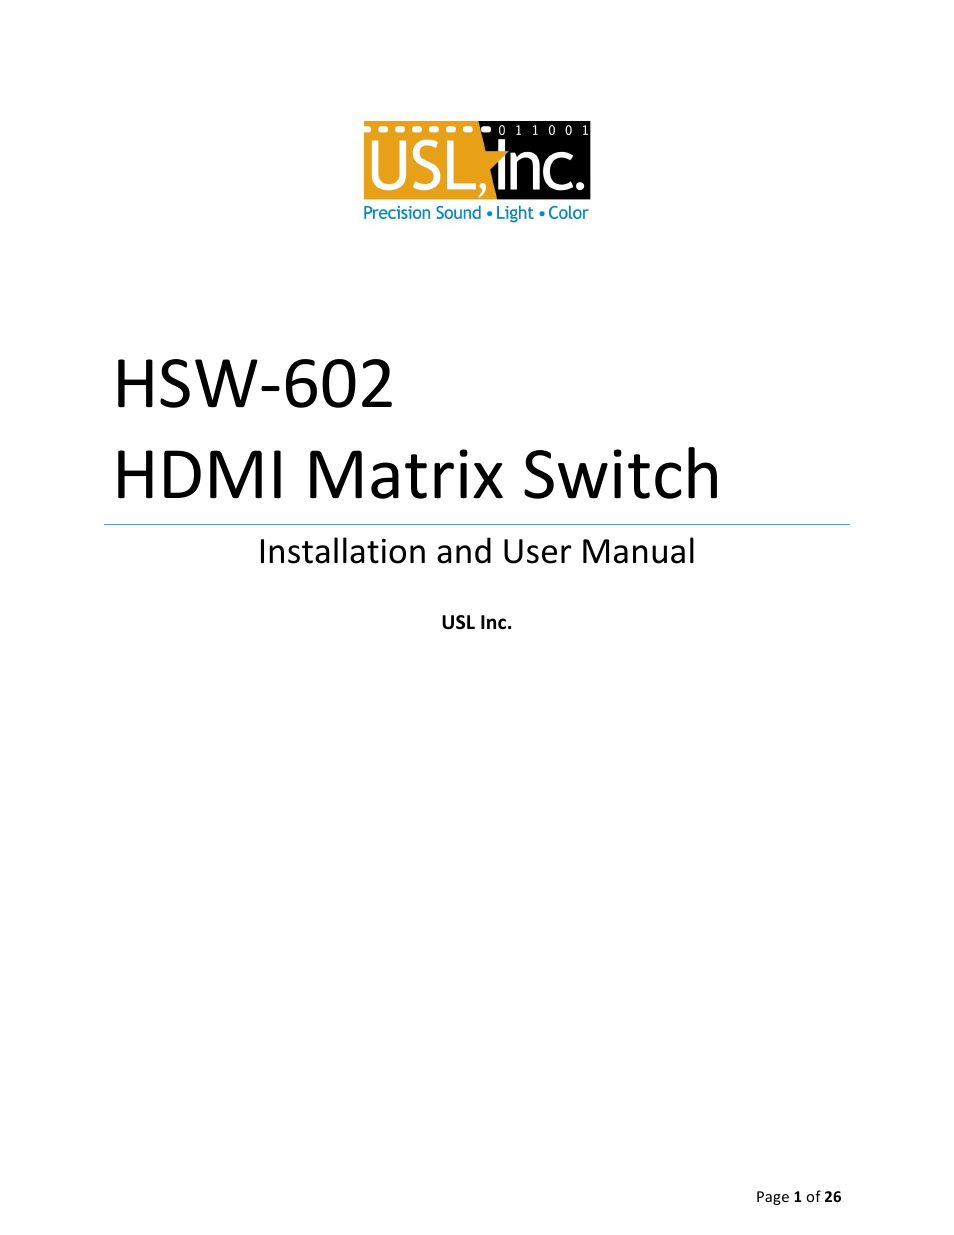 HSW-602